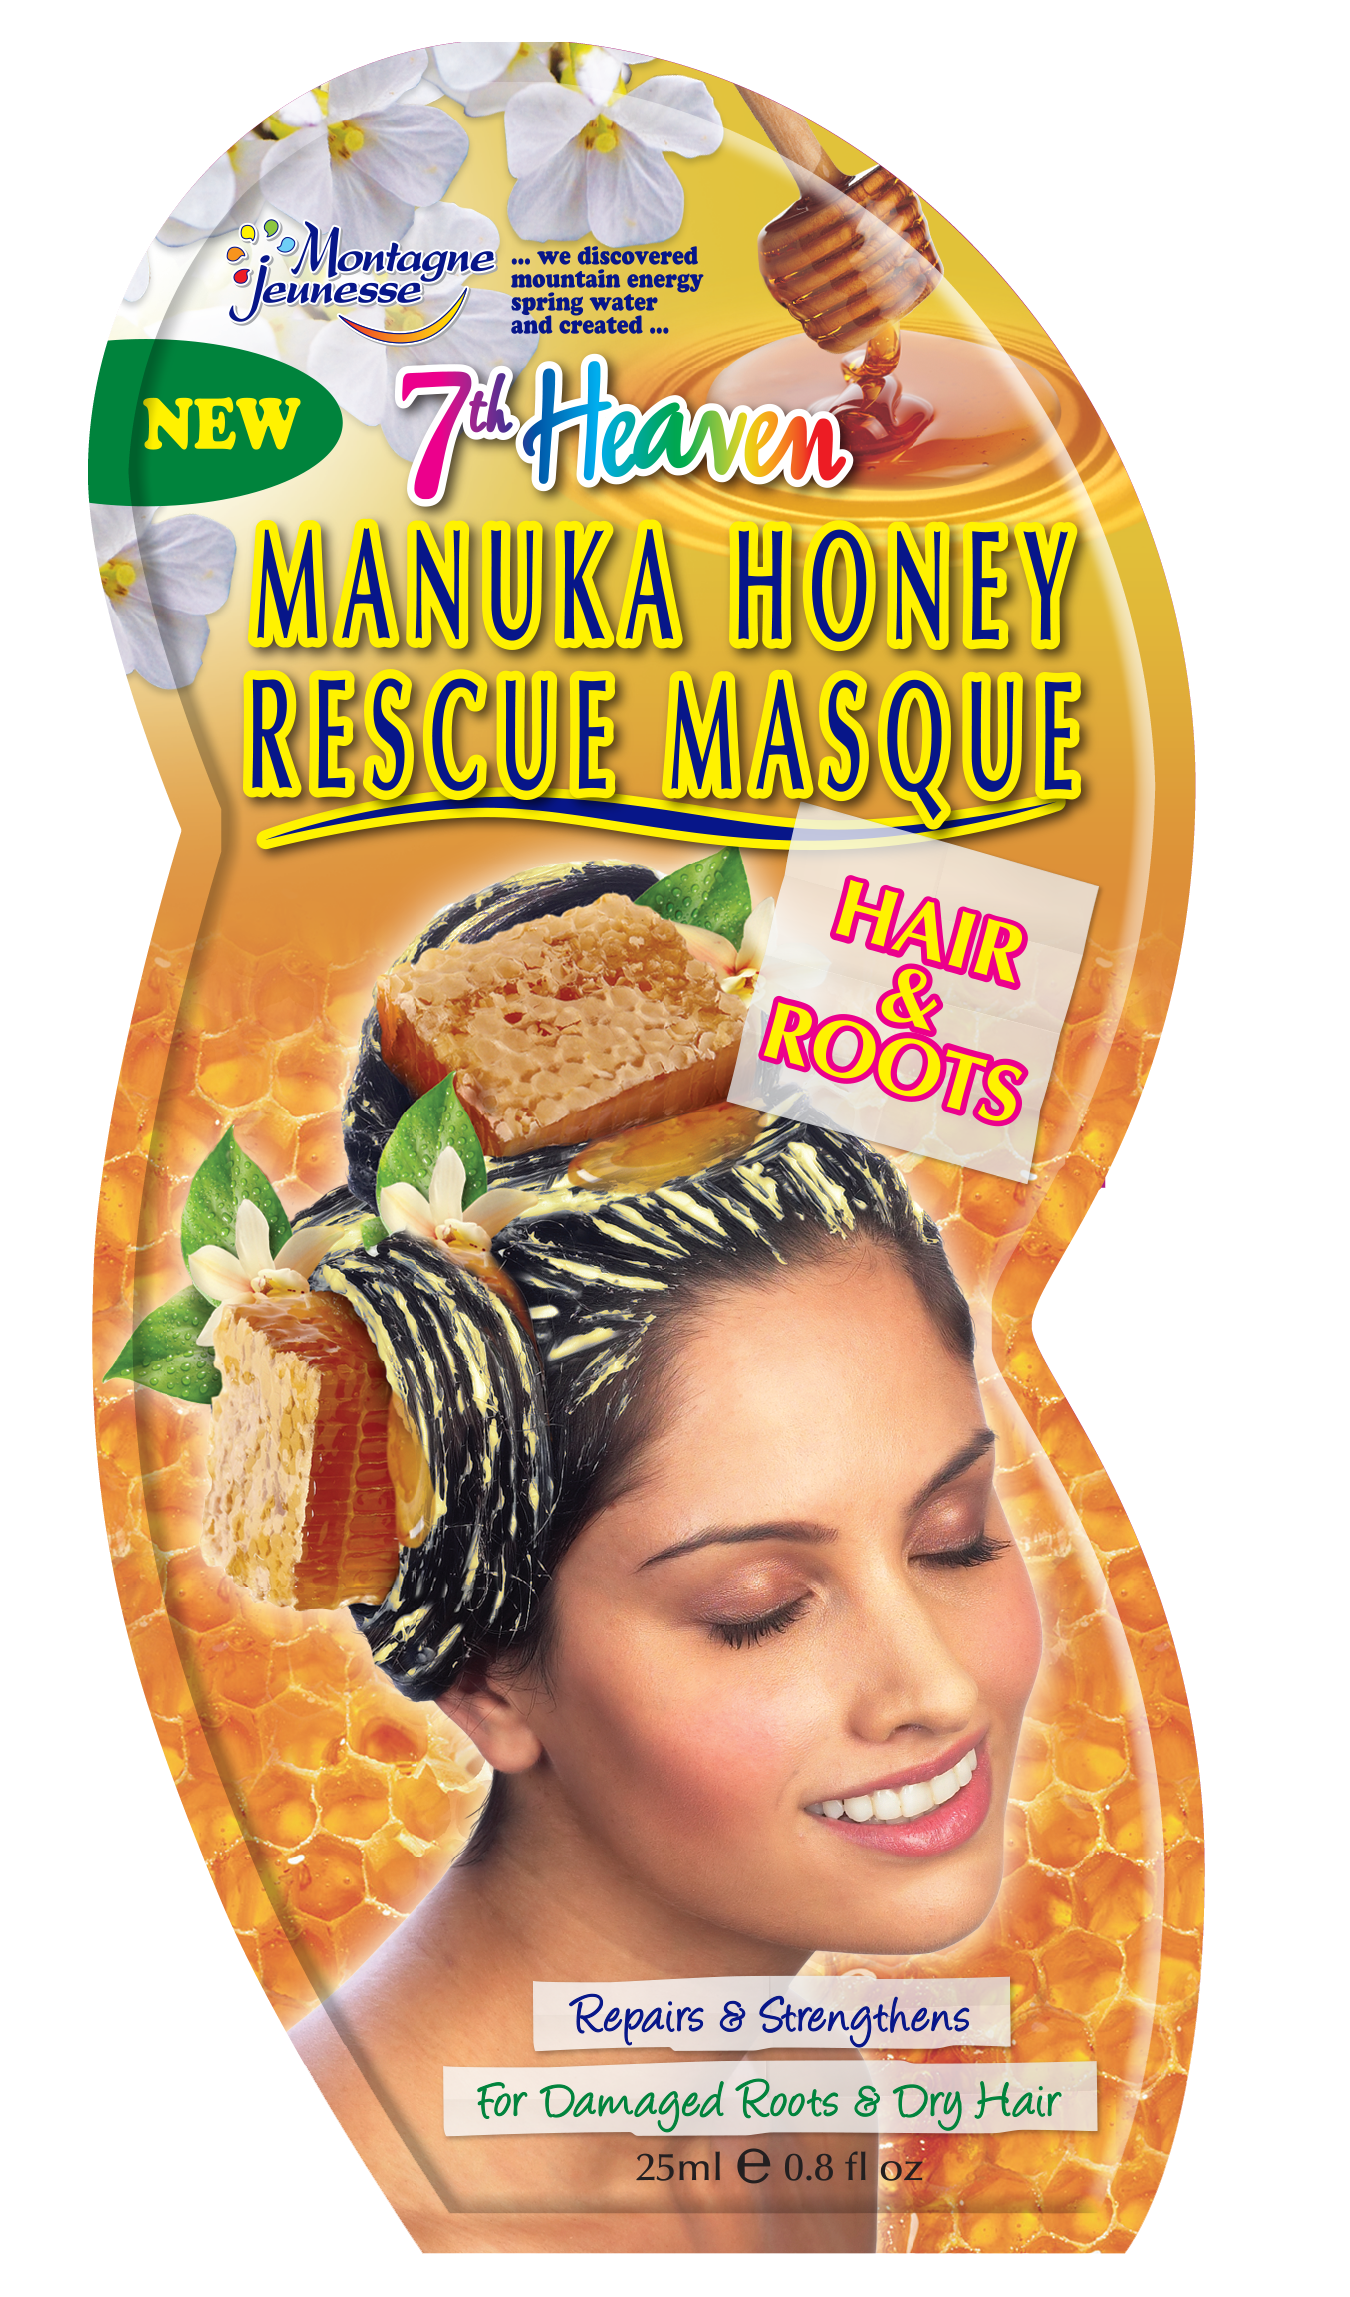 Montagne Jeunesse 7th Heaven Manuka Honey Rescue Masque Review